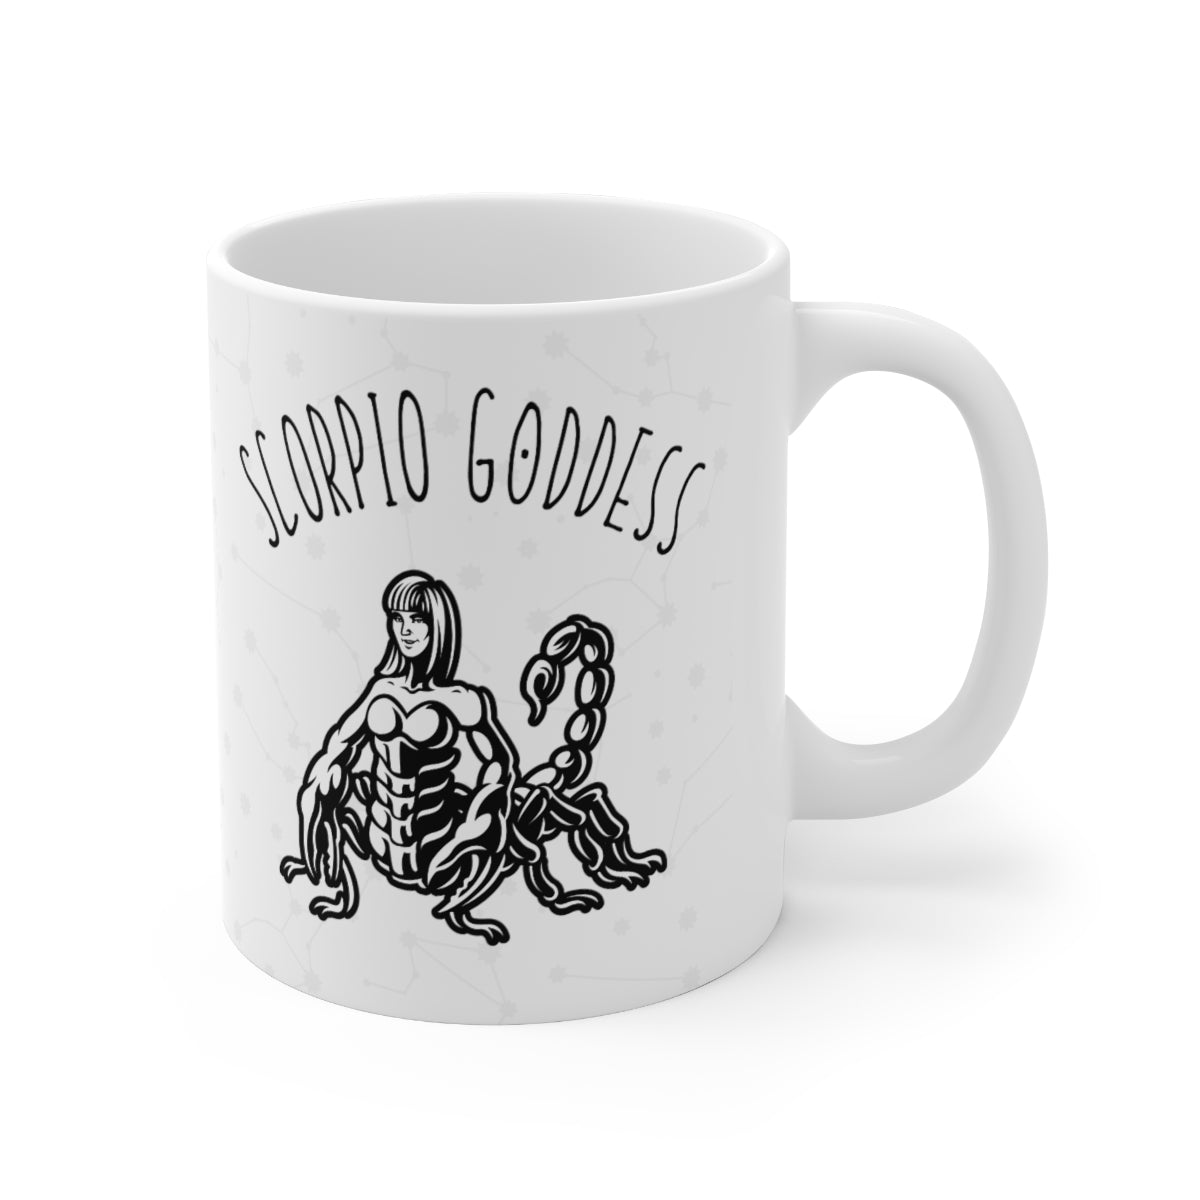 Scorpio Goddess Astrology Mug 4